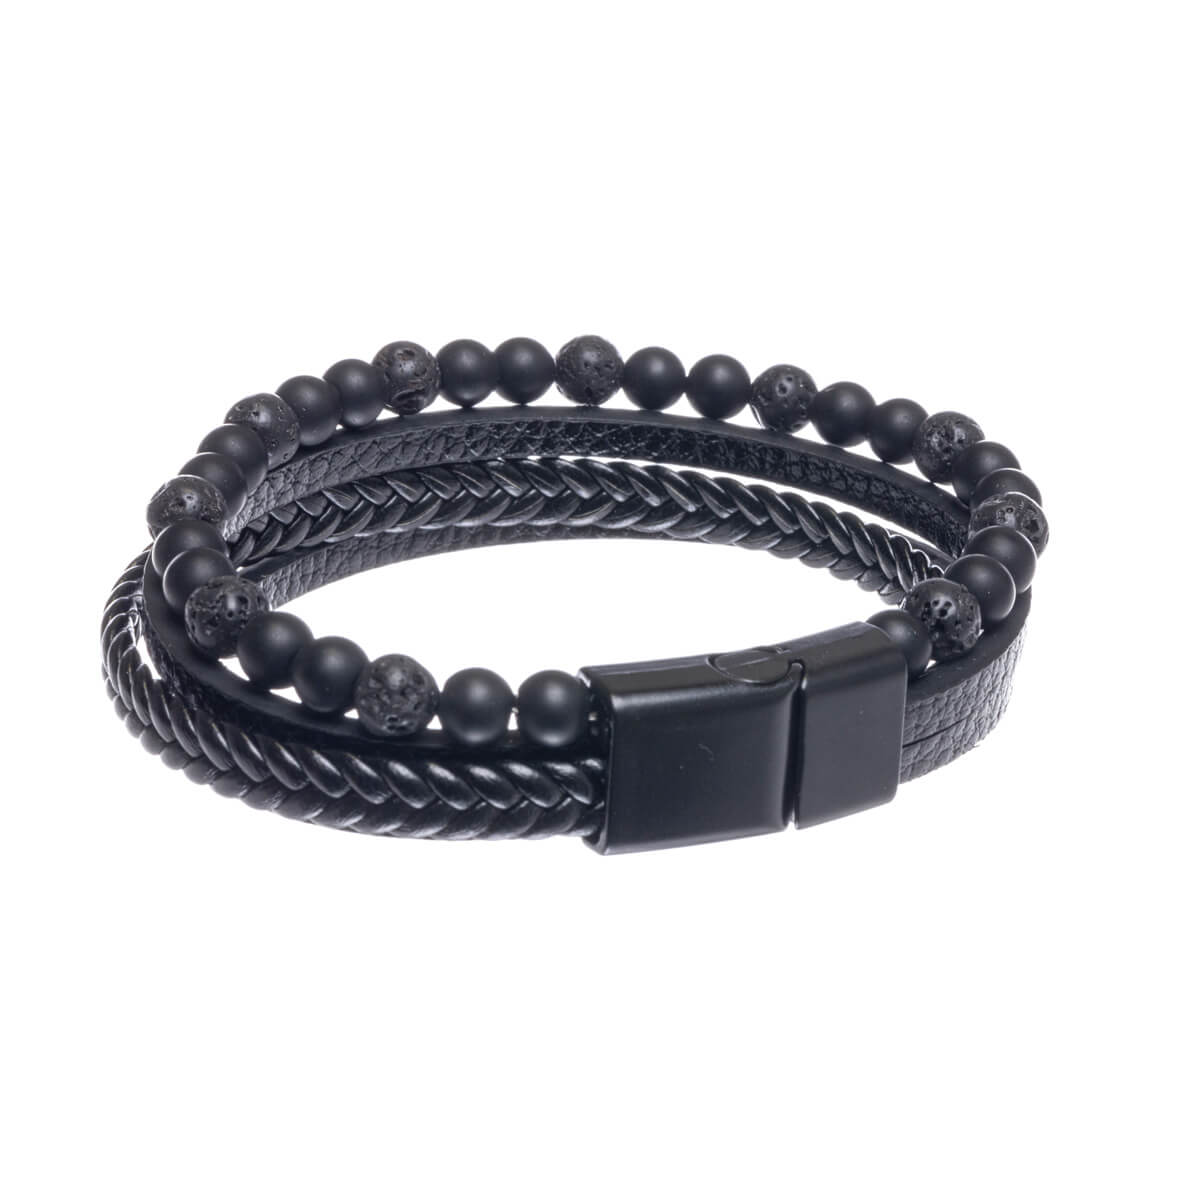 Four-row bracelet with beads (Steel 316L)